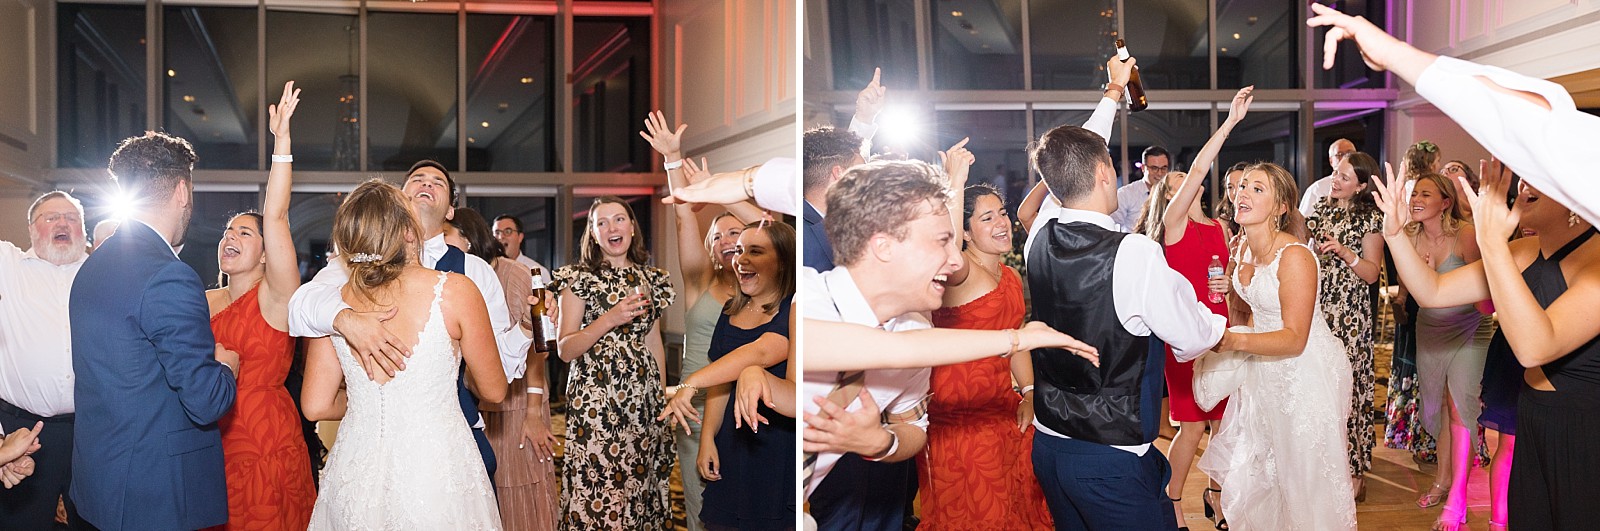 Wedding guests dancing at City Club reception| Raleigh Wedding Photographer Sarah Hinckley